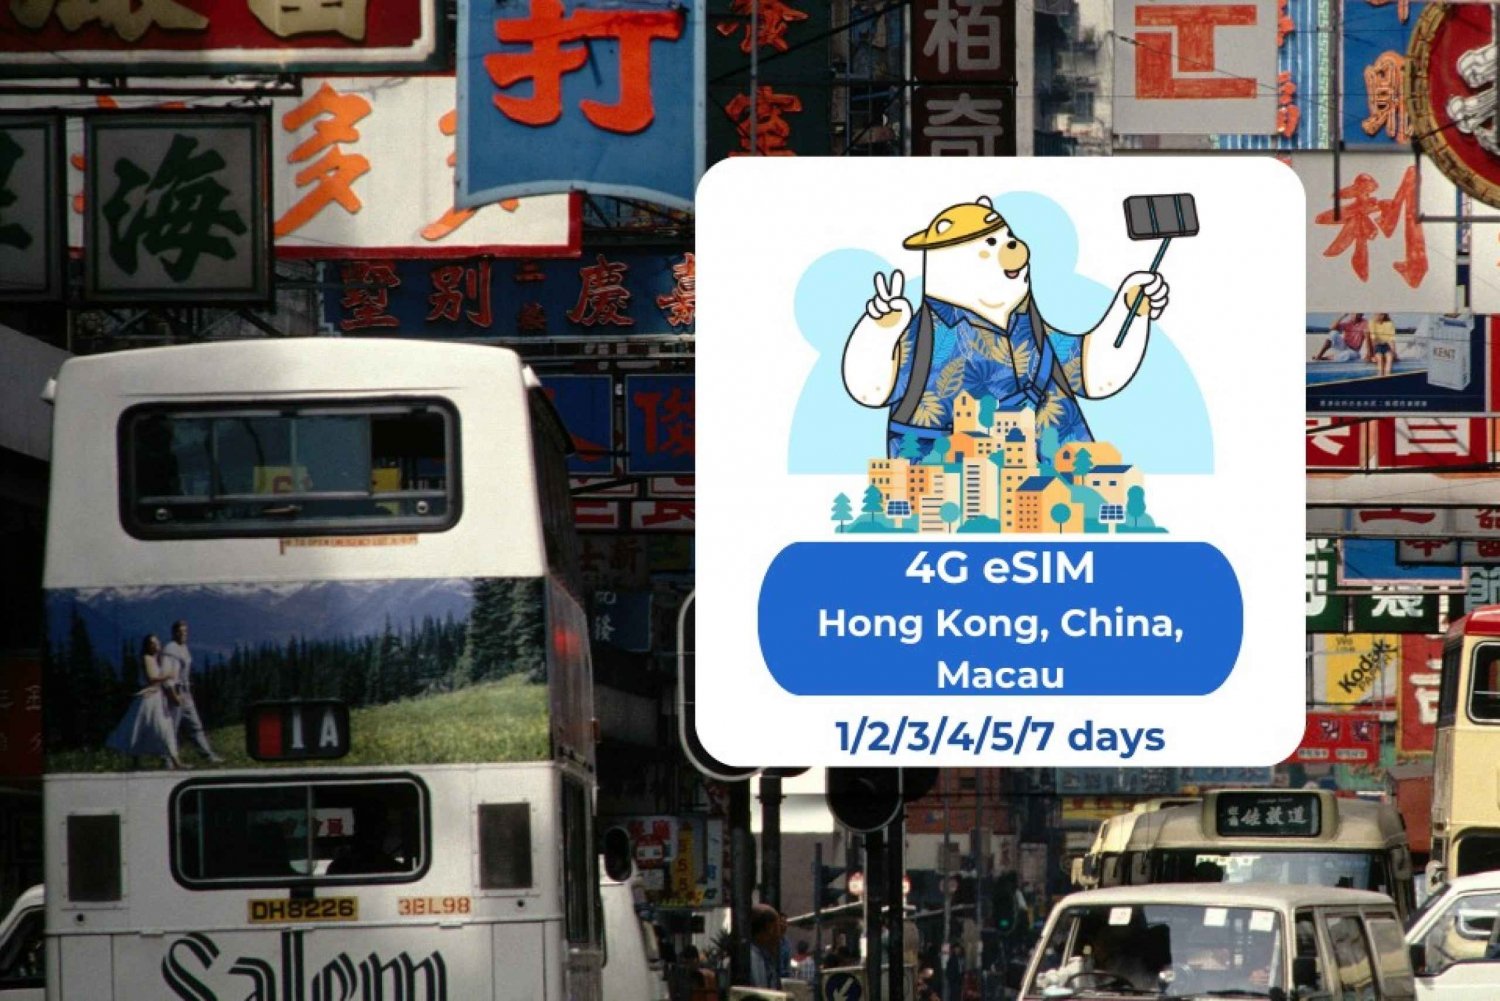 Hongkong - Chiny - Makau: Dane mobilne eSIM 1/2/3/4/5/7 dni